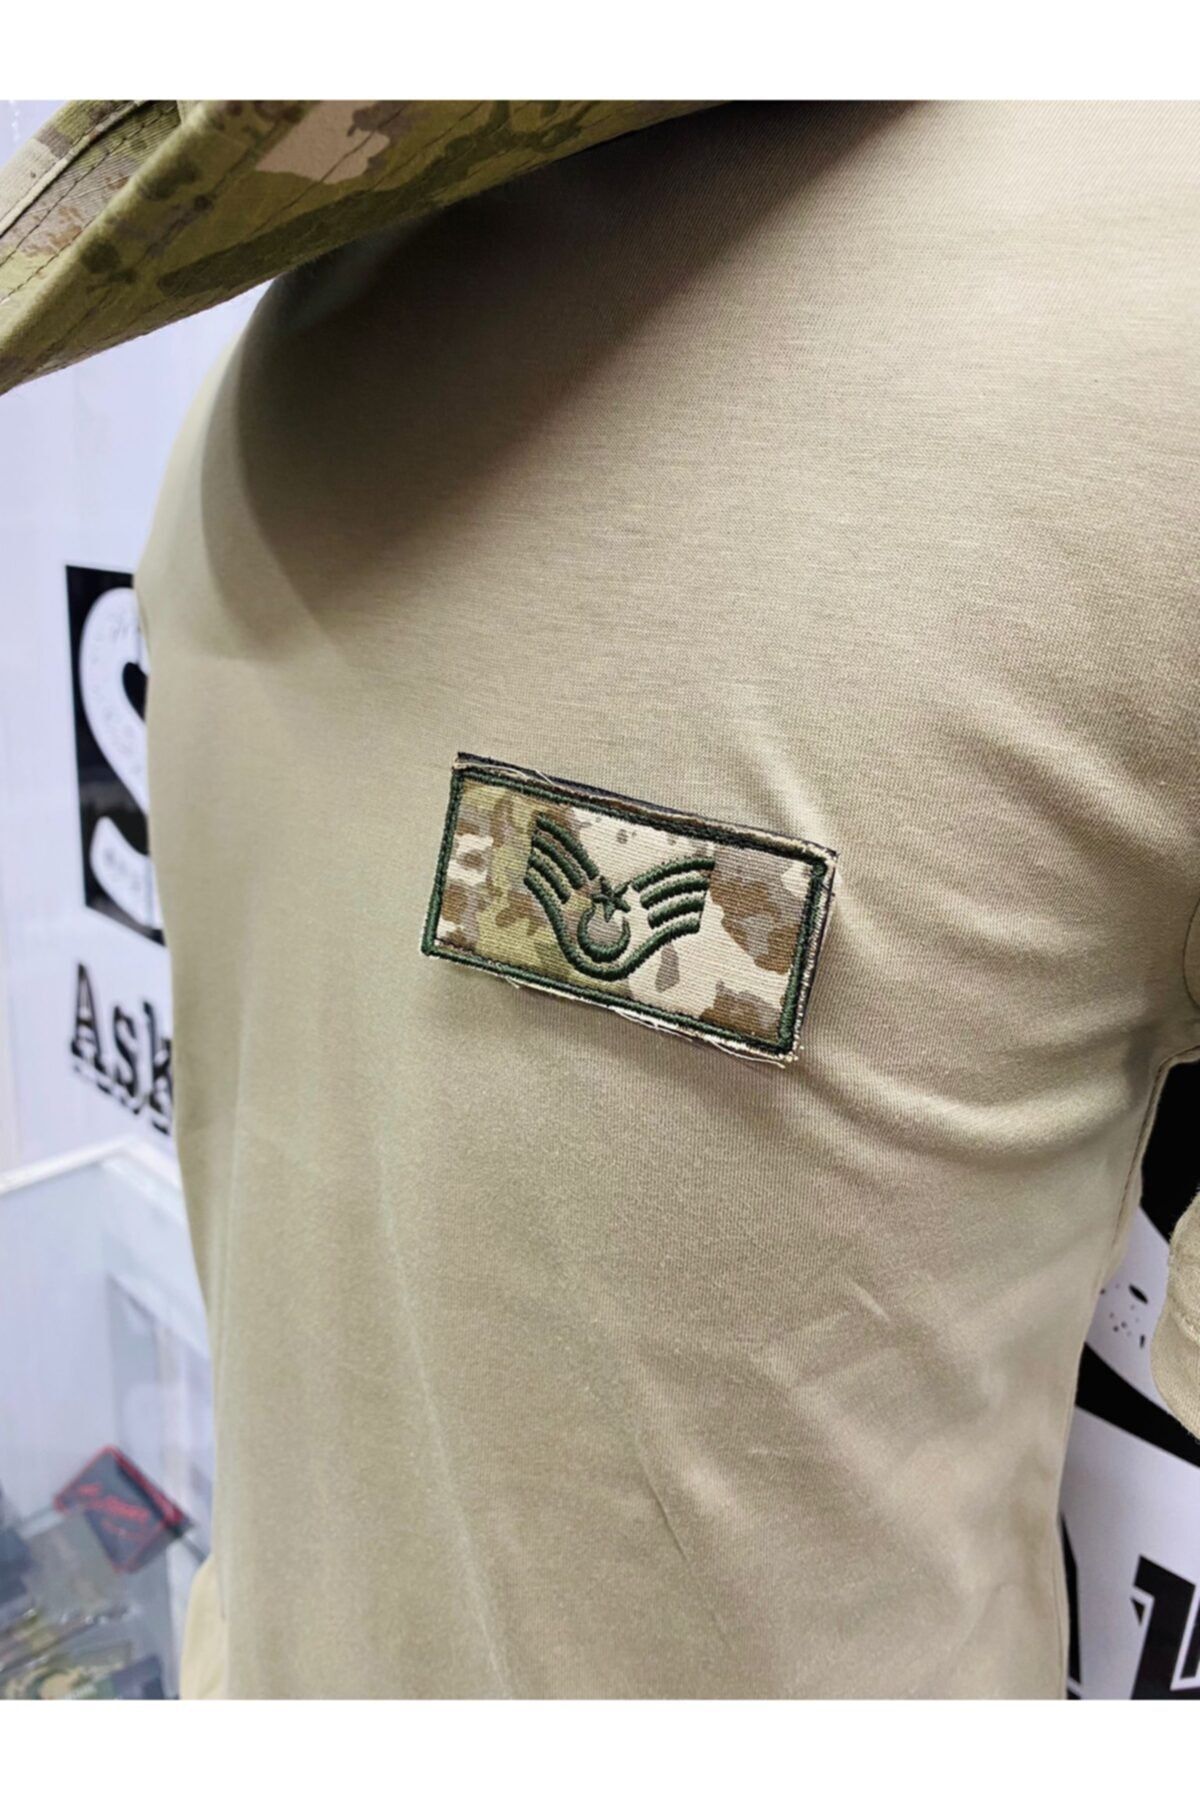 Silyon Askeri Giyim Yeni Piyade Cırtlı Komando T-shirt